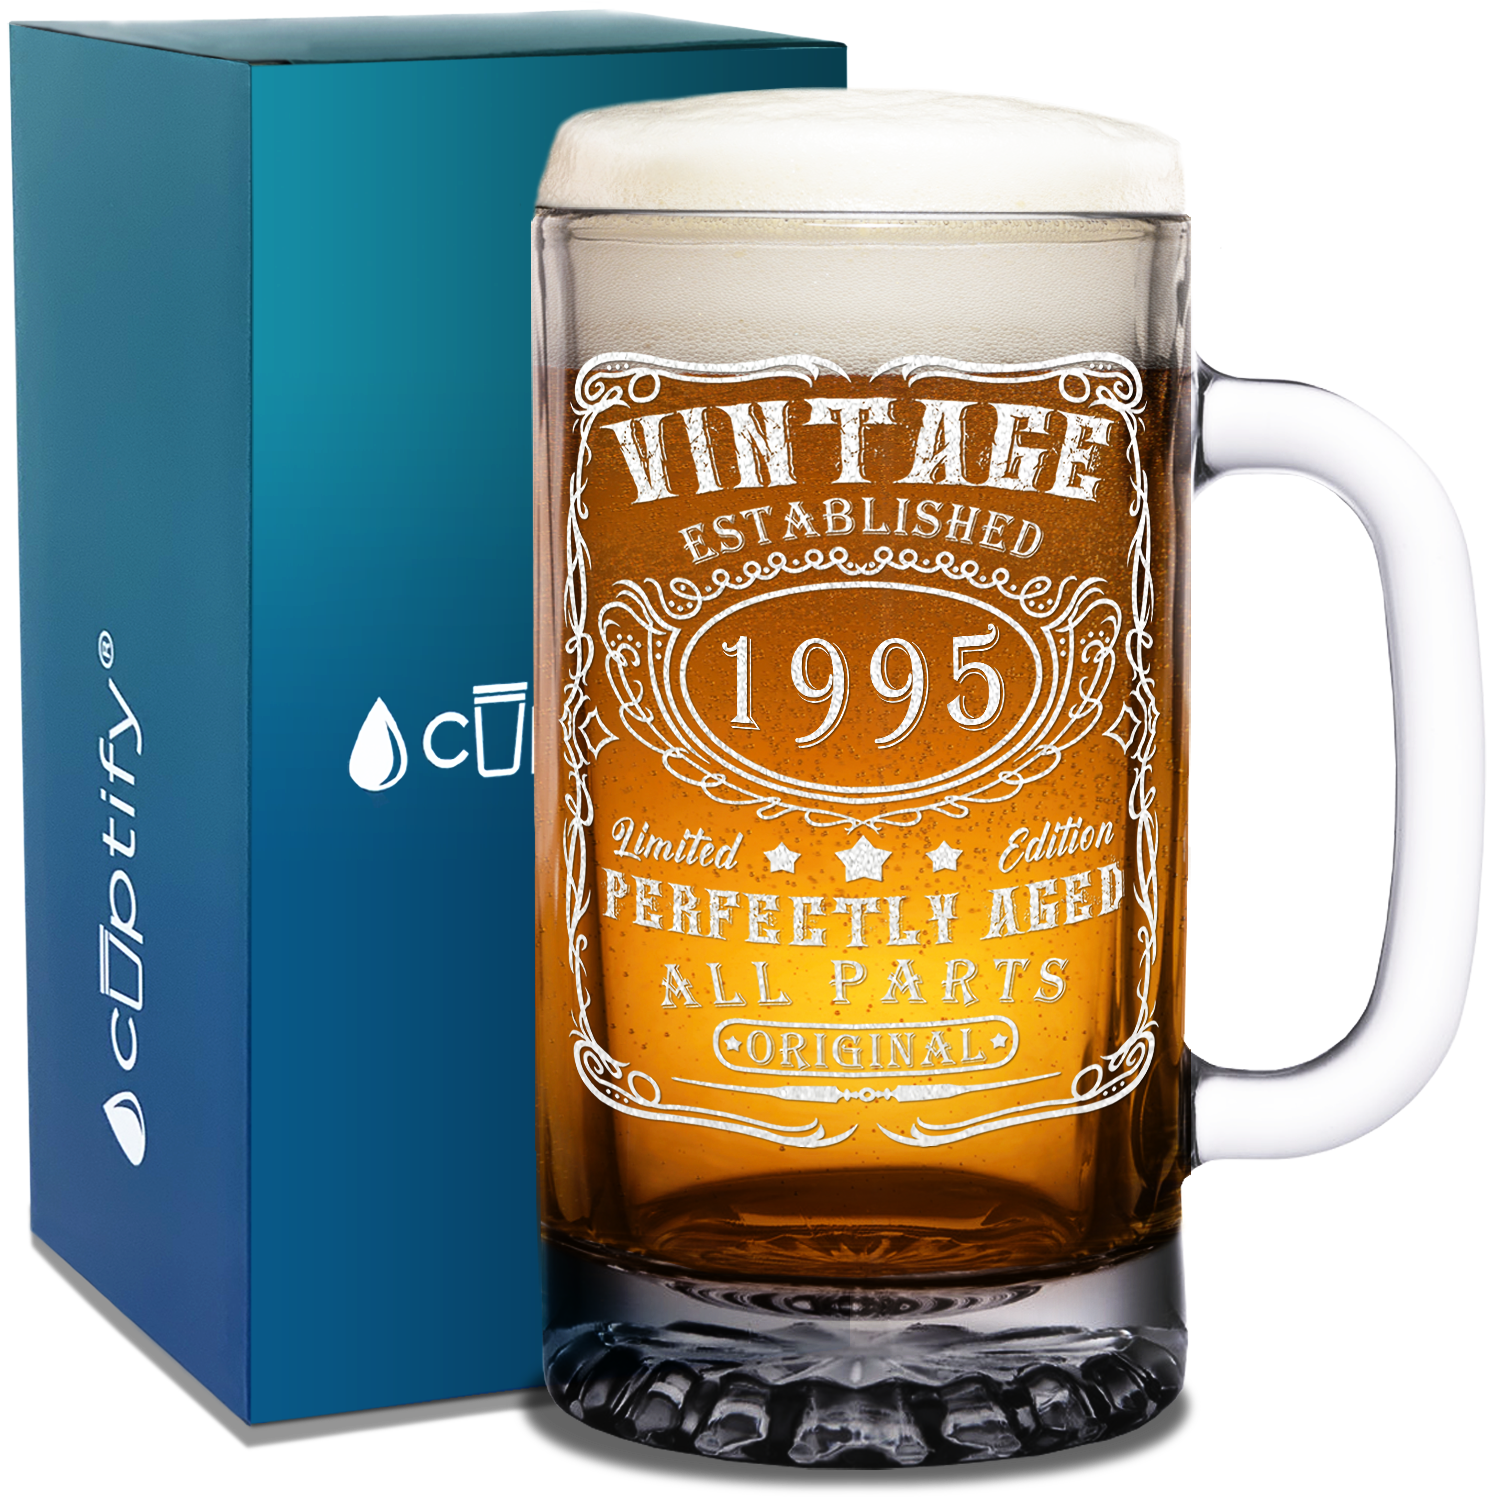 27th Birthday Gift Vintage Established 1995 Etched on 16oz Glass Mug